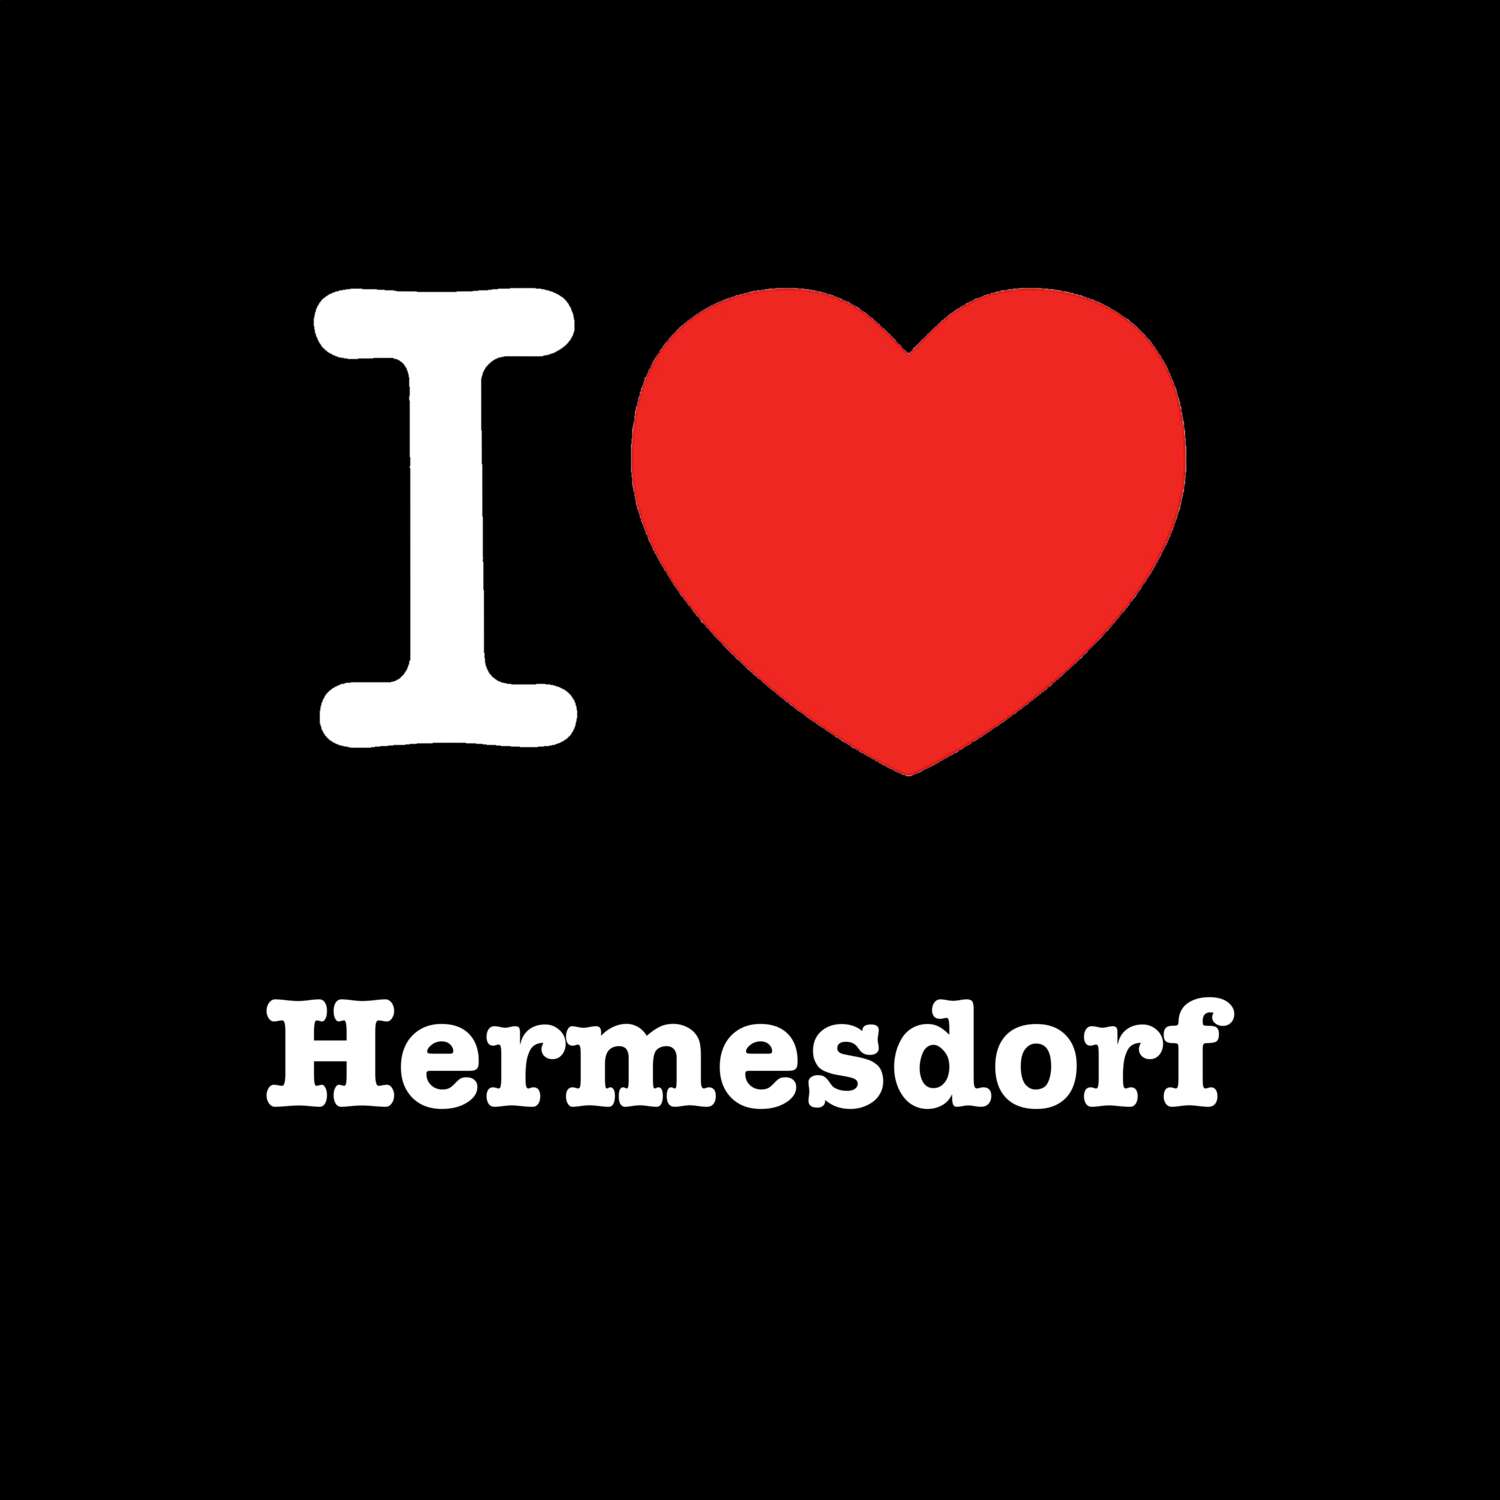 Hermesdorf T-Shirt »I love«